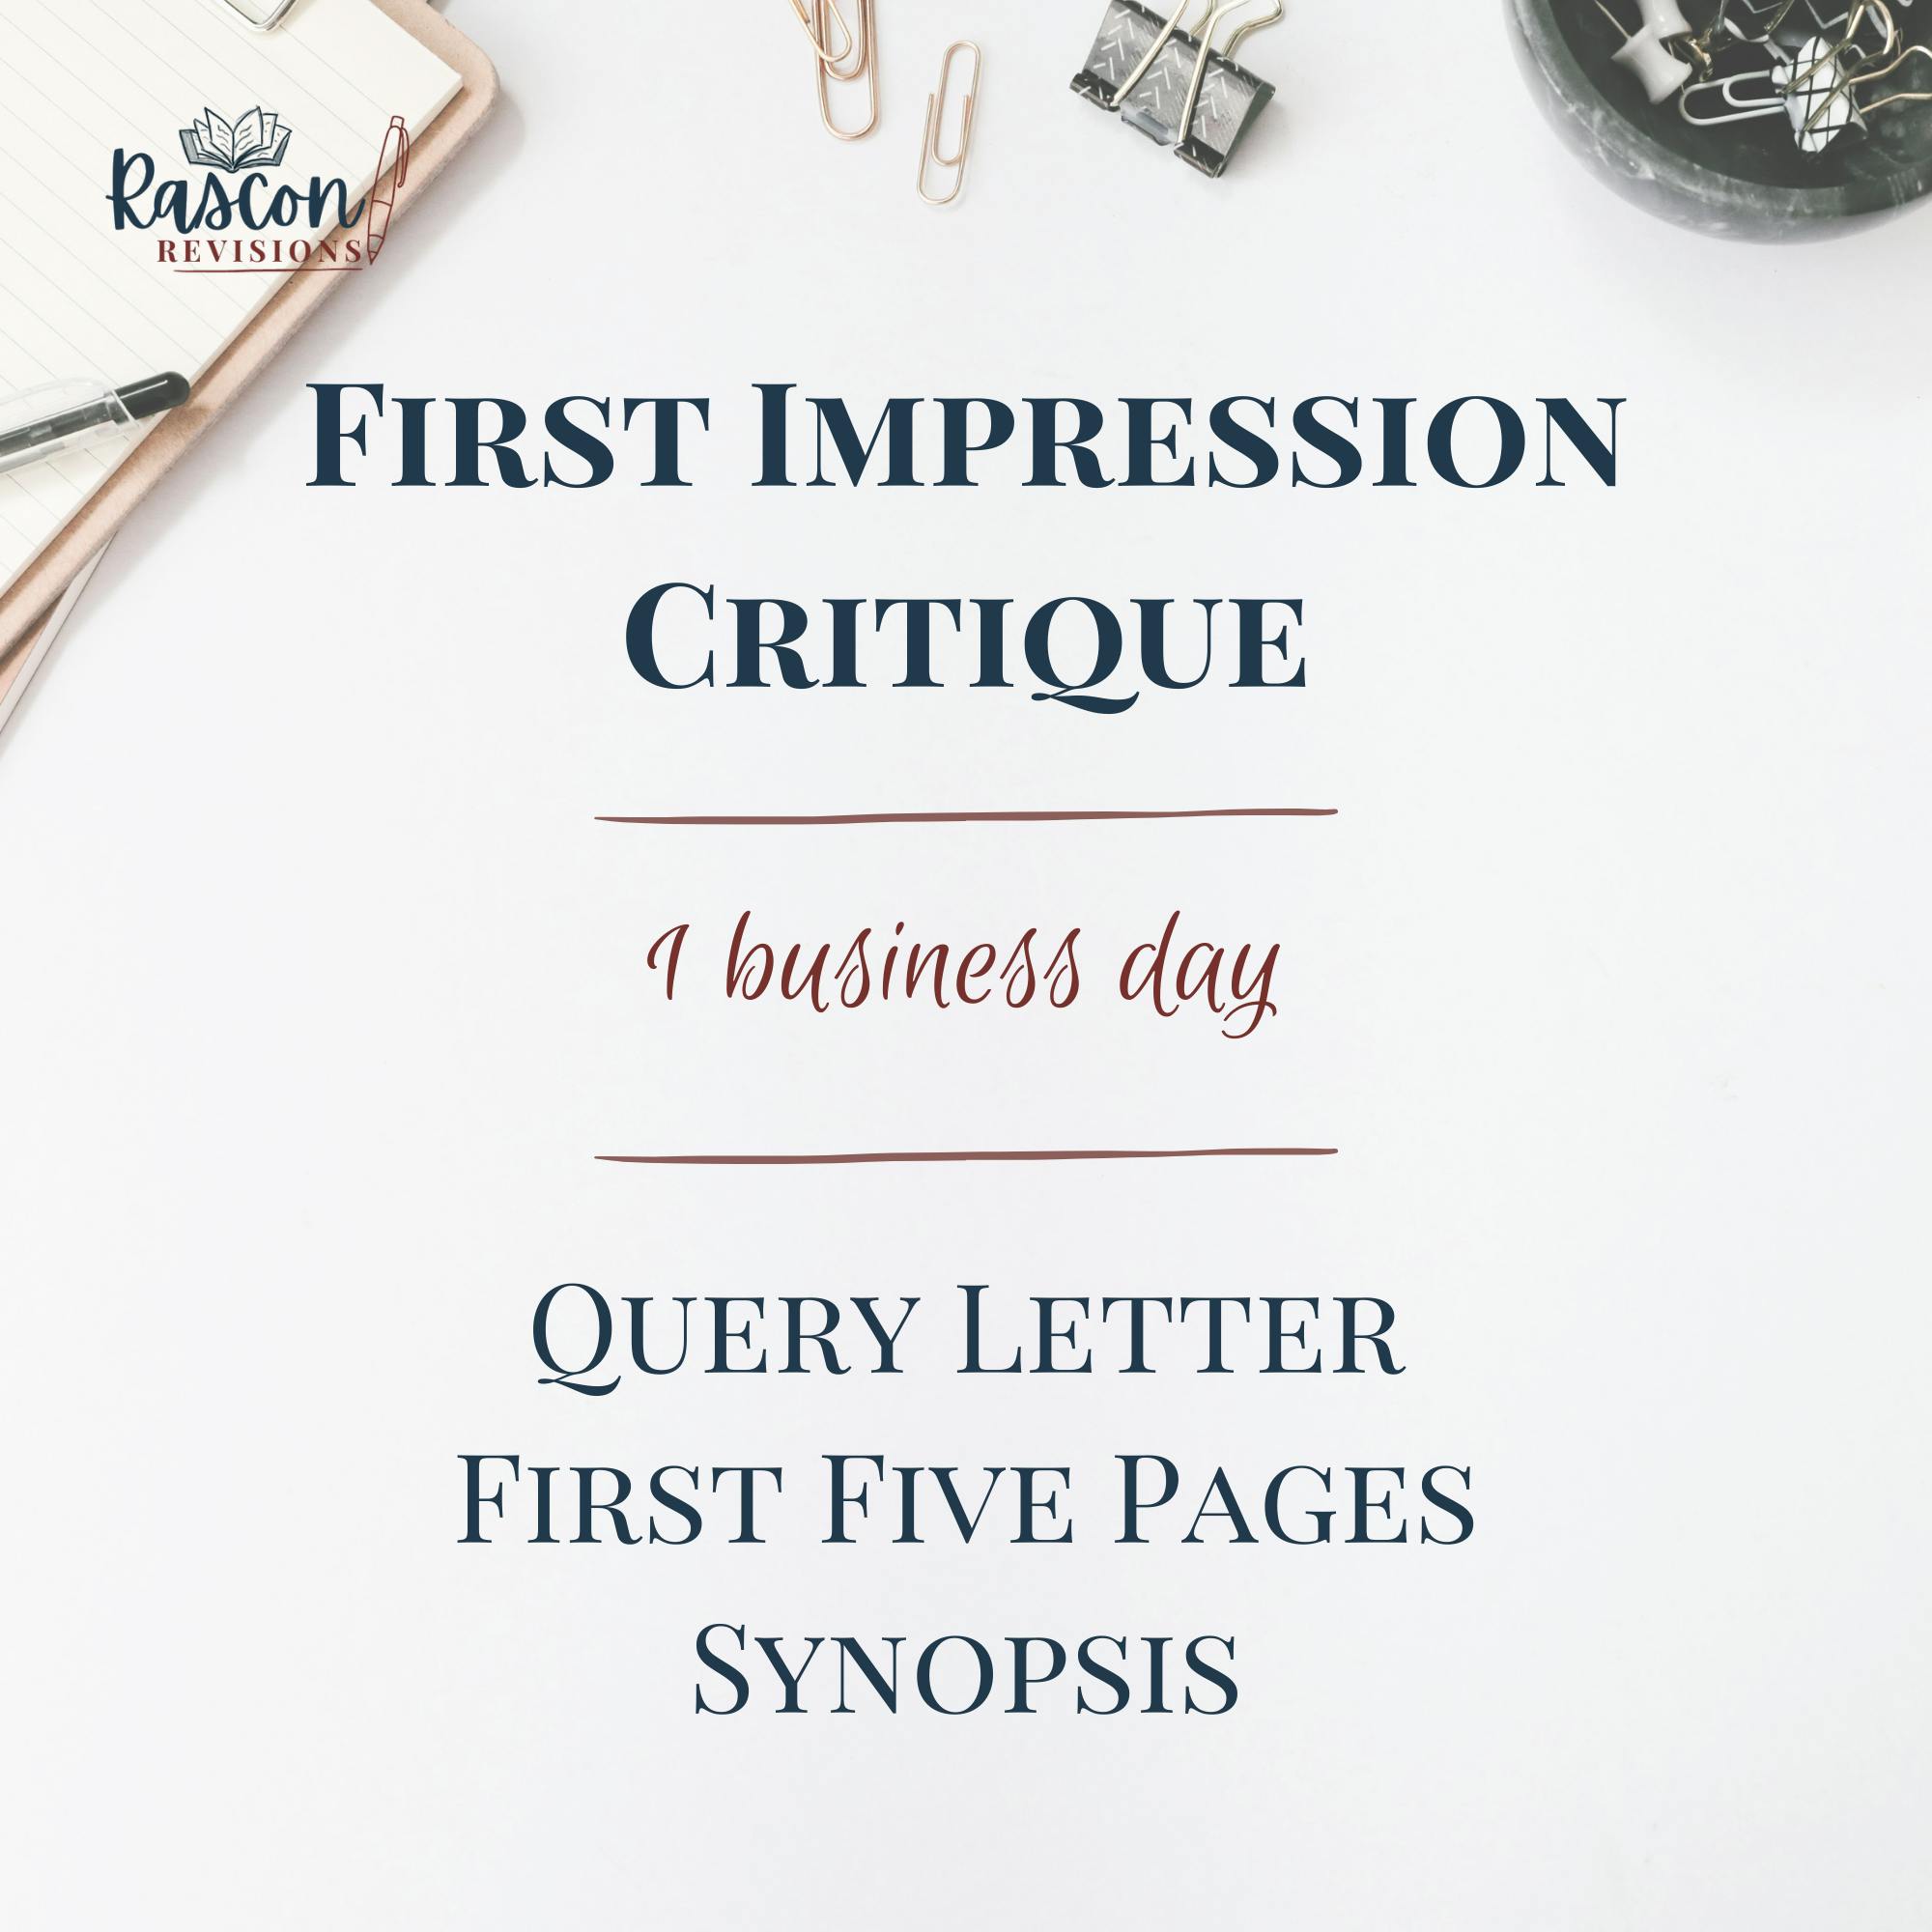 First Impression Critique